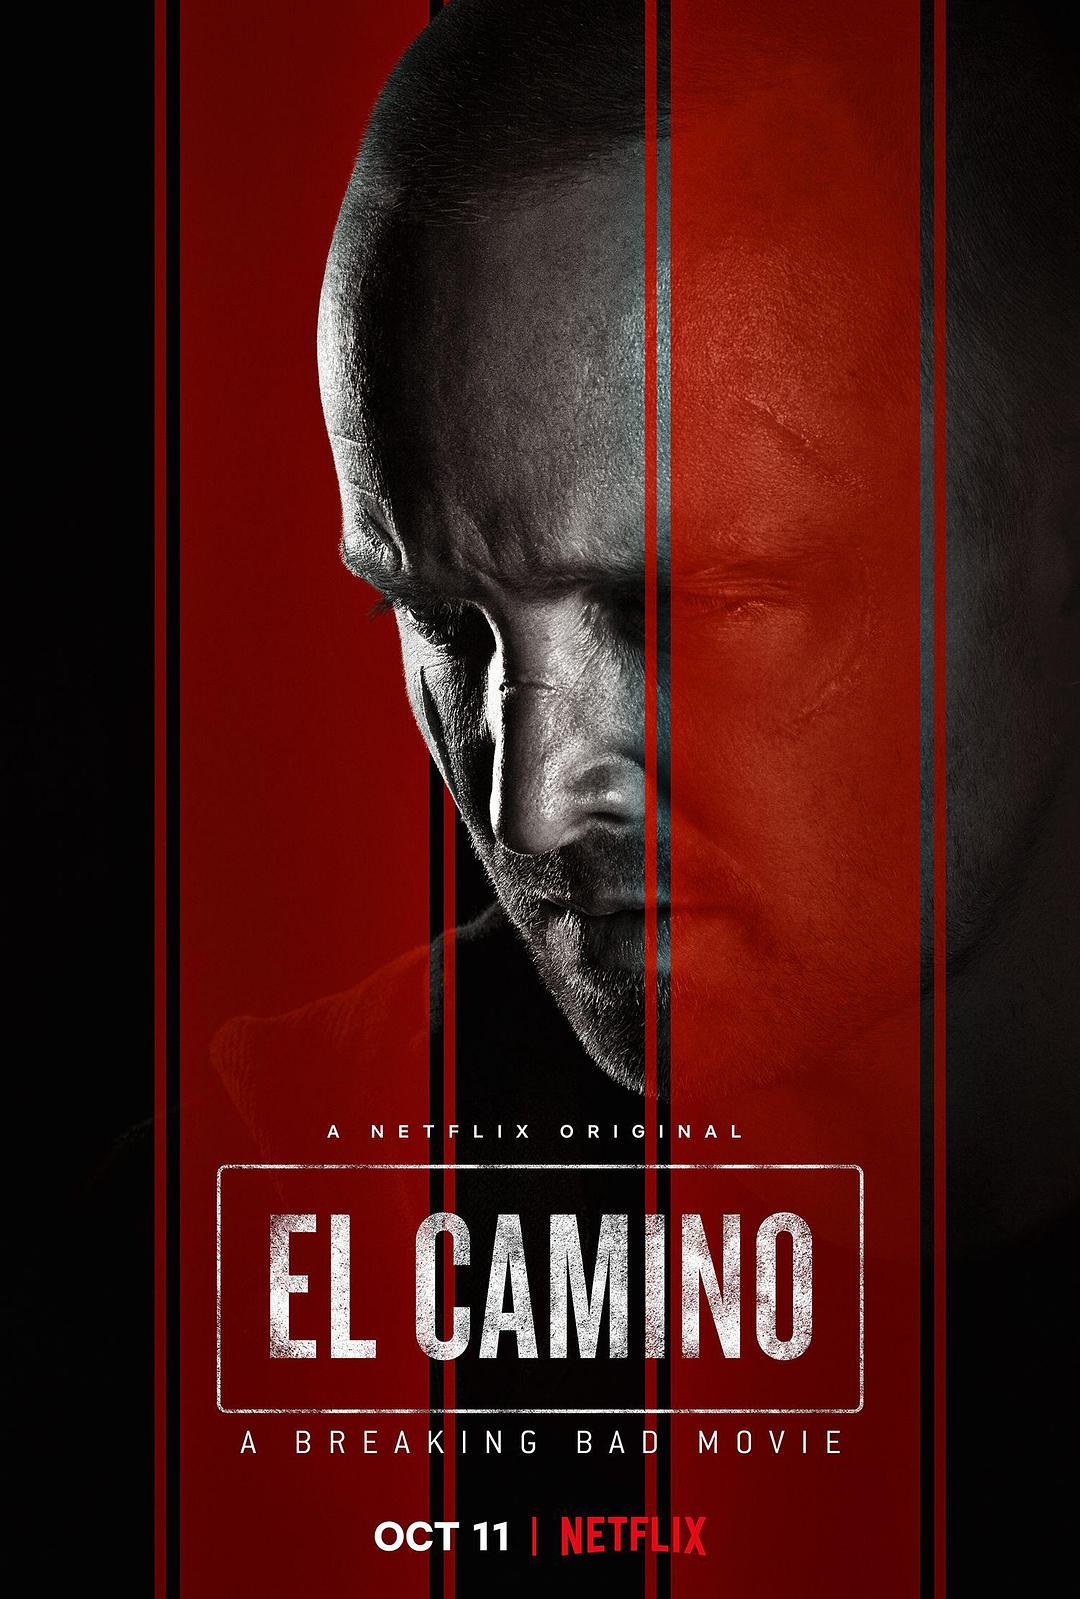 绝命毒师电影:续命之徒 El.Camino.A.Breaking.Bad.Movie.2019.2160p.NF.WEBRip.x265.10bit.HDR.DD5.1.Atmos-TrollUHD 16.85GB-1.png